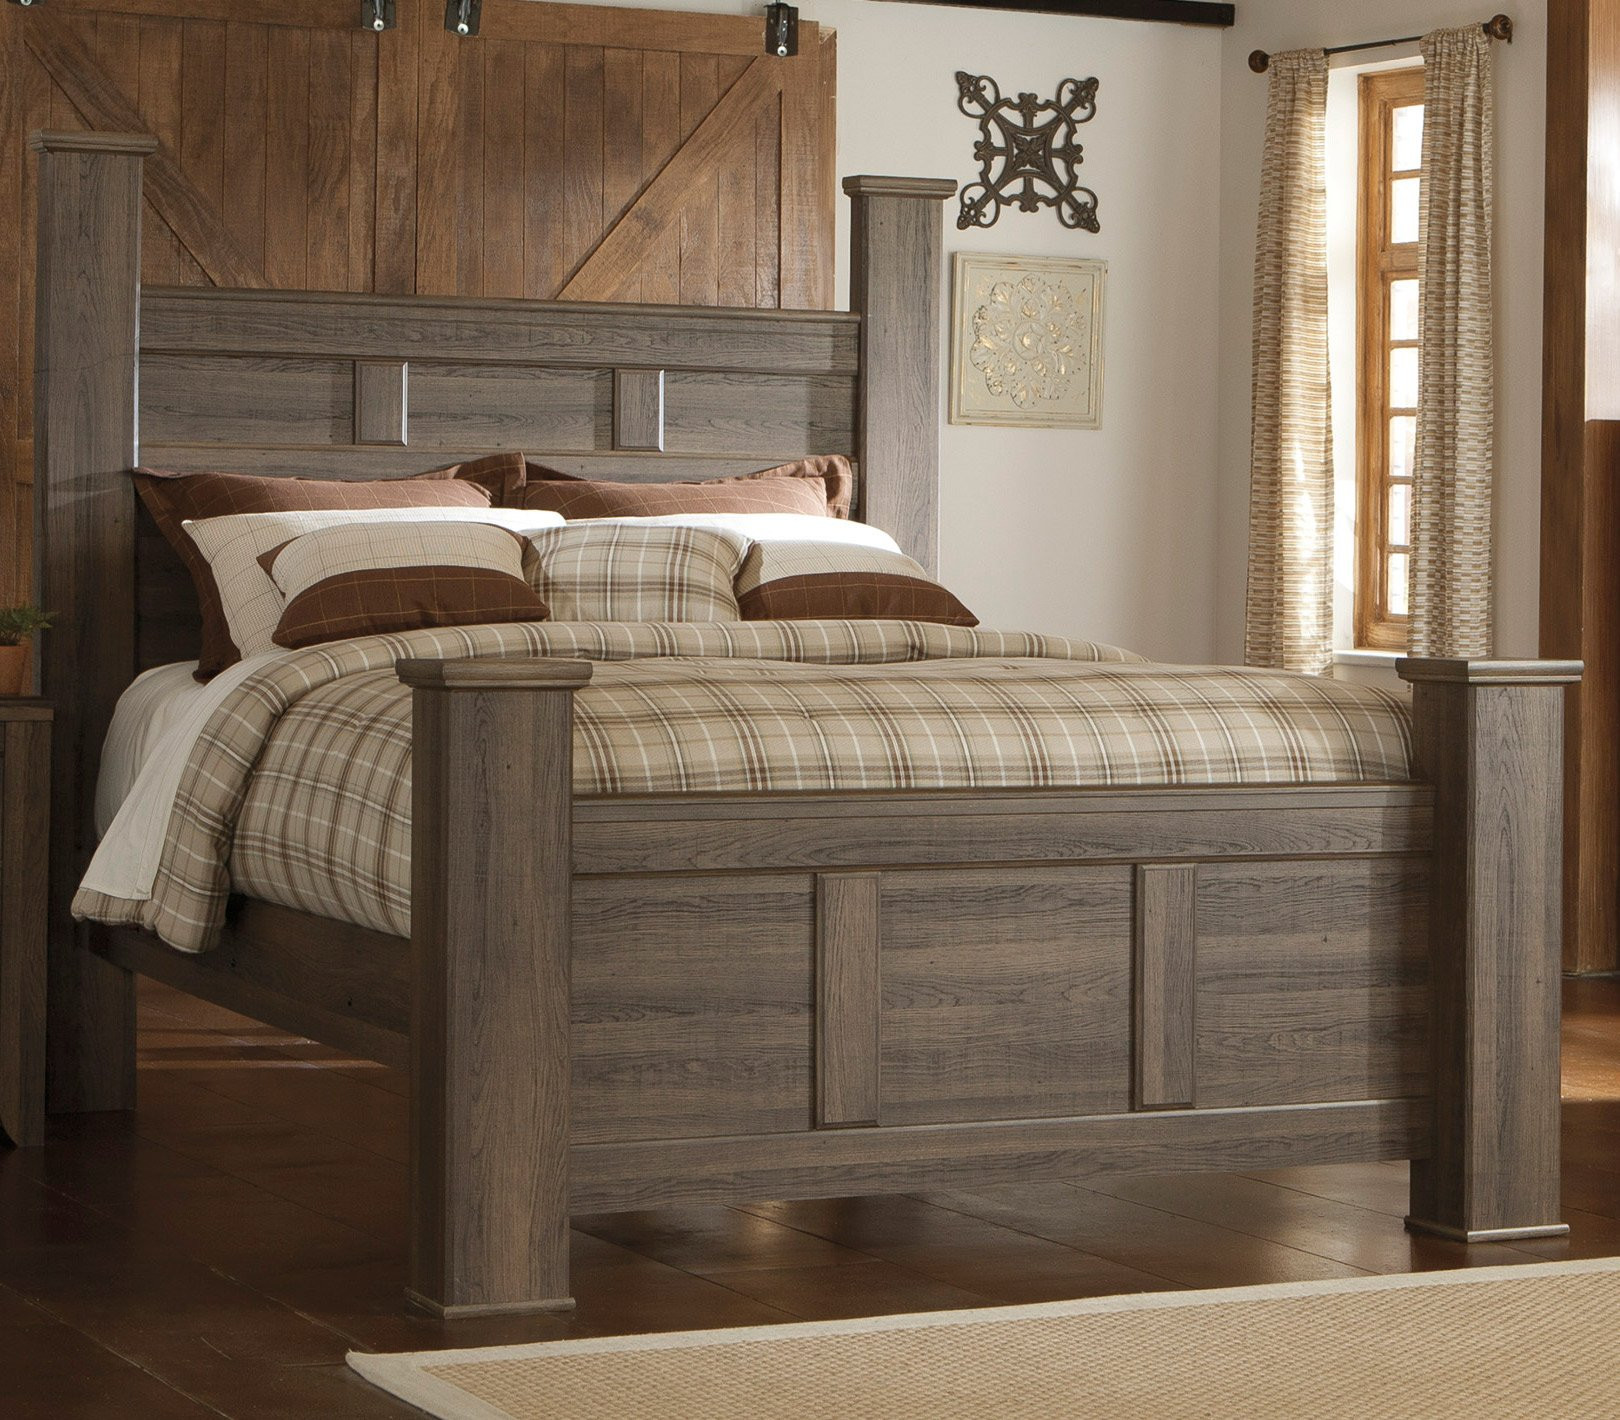 Rustic Bedroom Sets King
 Driftwood Rustic Modern 6 Piece King Bedroom Set Fairfax